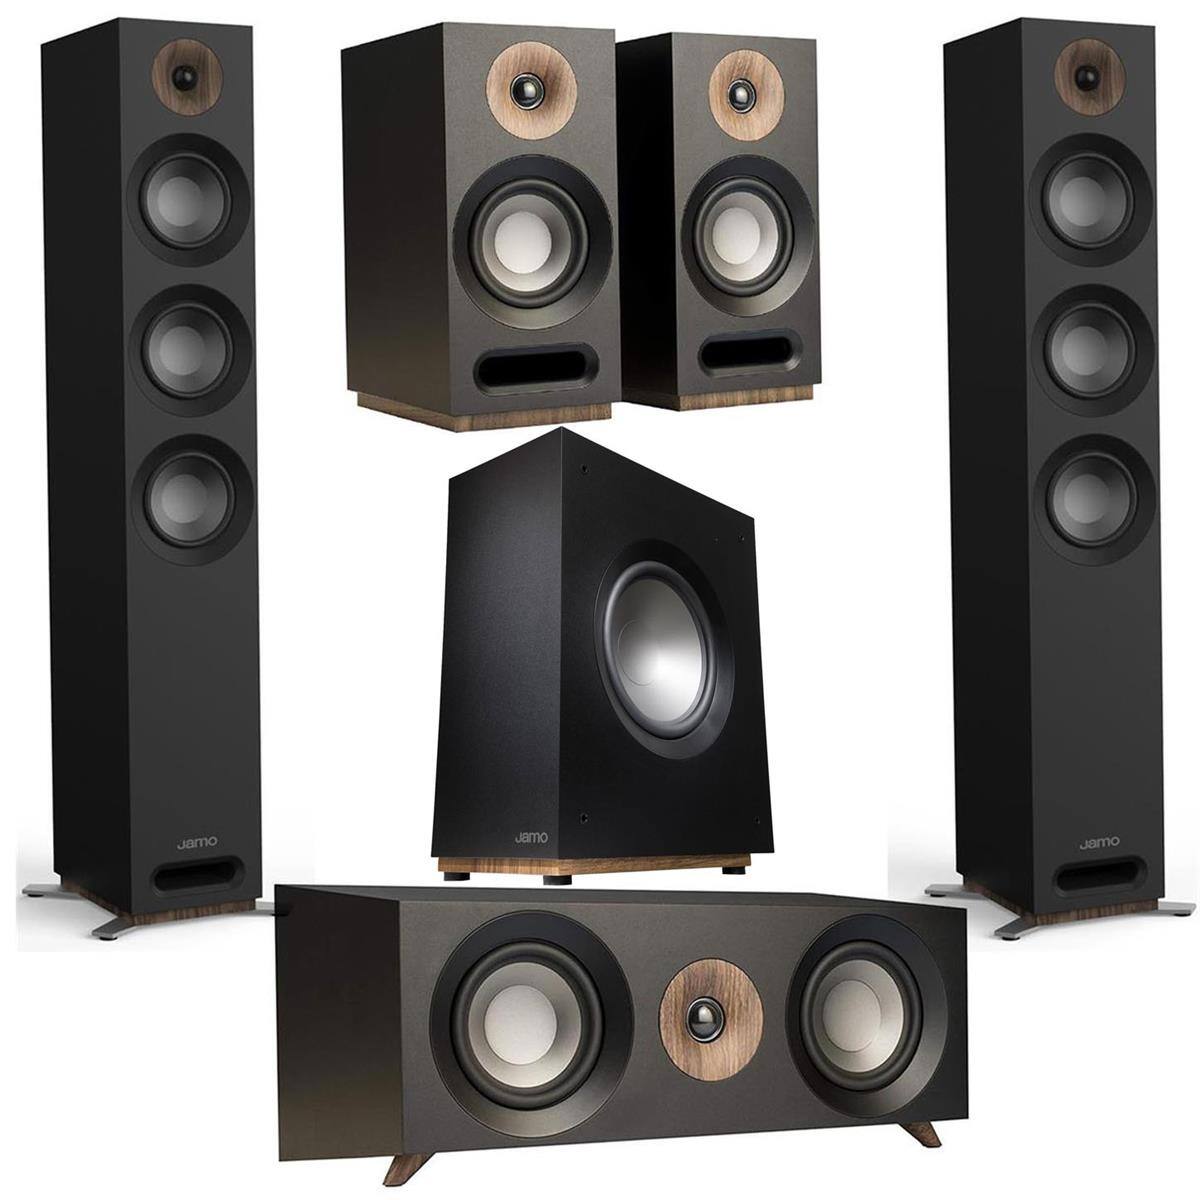 Jamo Speakers: Pair S 809 + S 83 Center + Pair S 803 Bookshelves, S 810 10" Sub $499 (or less w/ SD Cashback) + free s/h